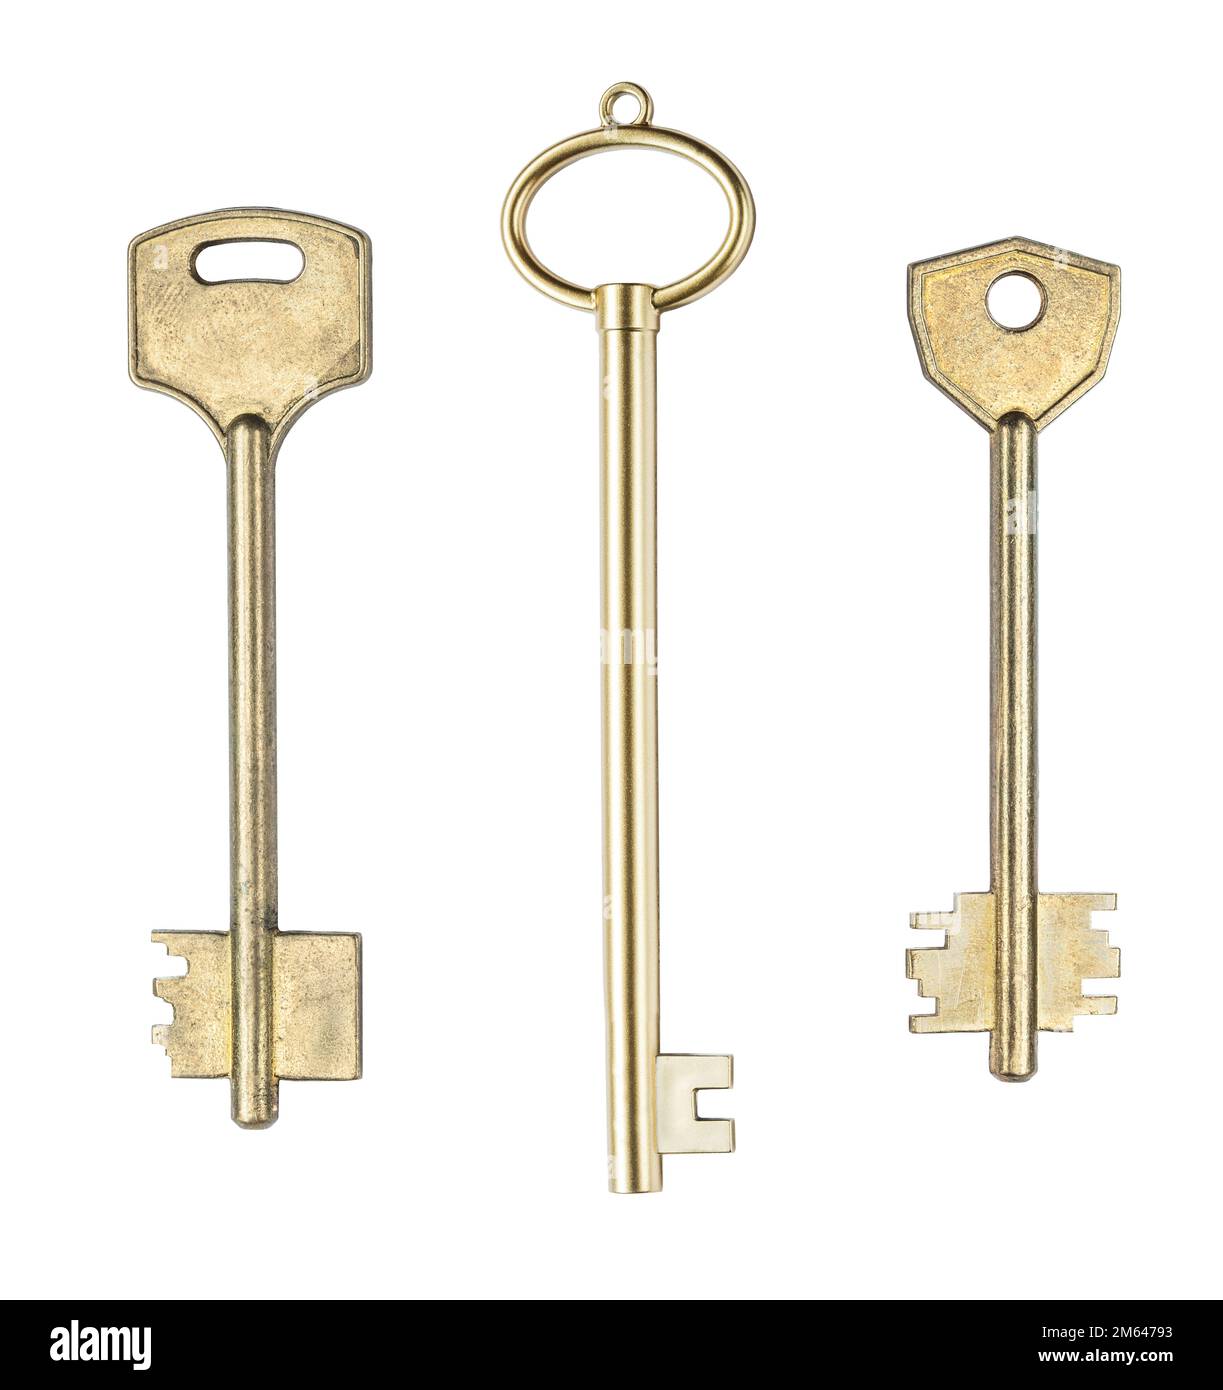 set of three brass house doors keys isolated on white background Stock Photo